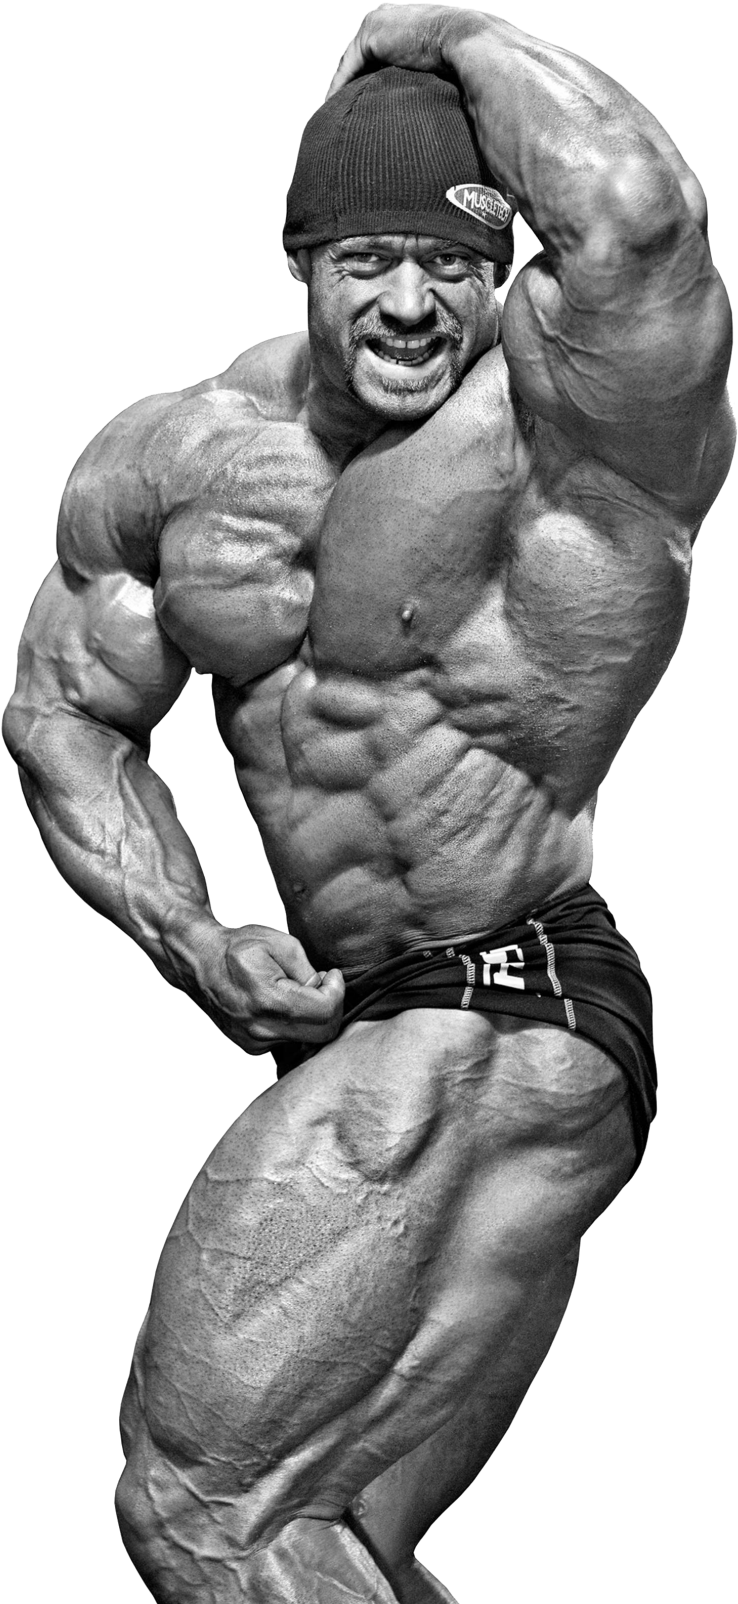 Muscular Bodybuilder Flexing Biceps